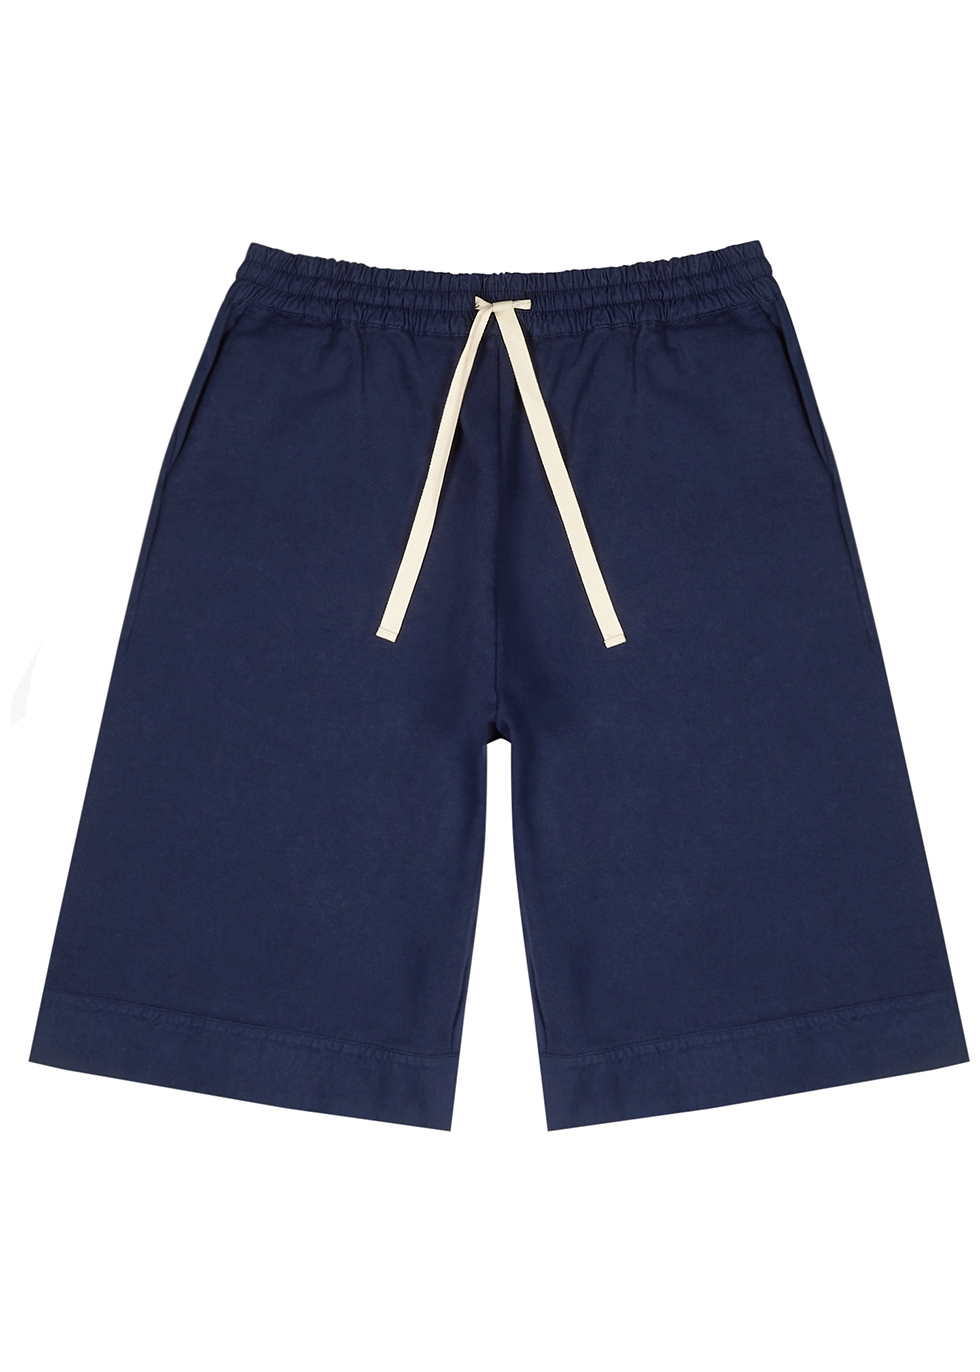 Navy cotton shorts